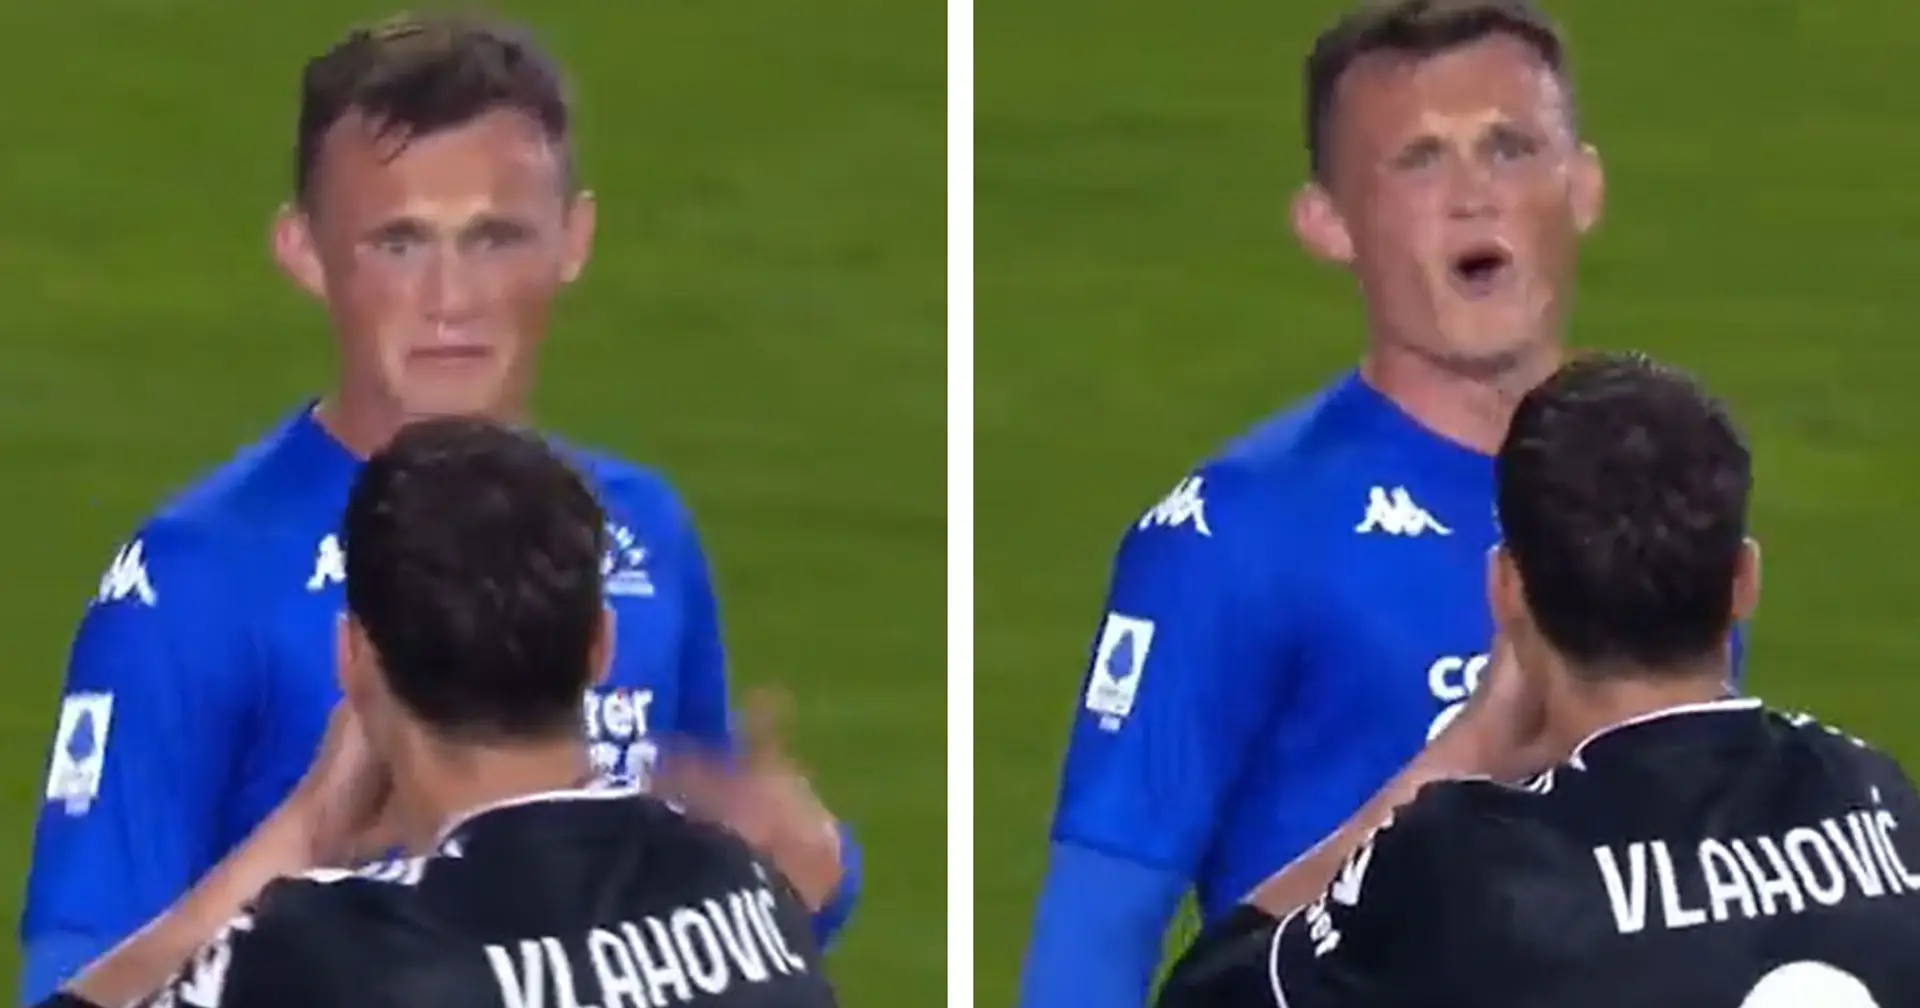 Henderson prende in giro Vlahovic durante Empoli-Juventus: la frase detta al centravanti è virale